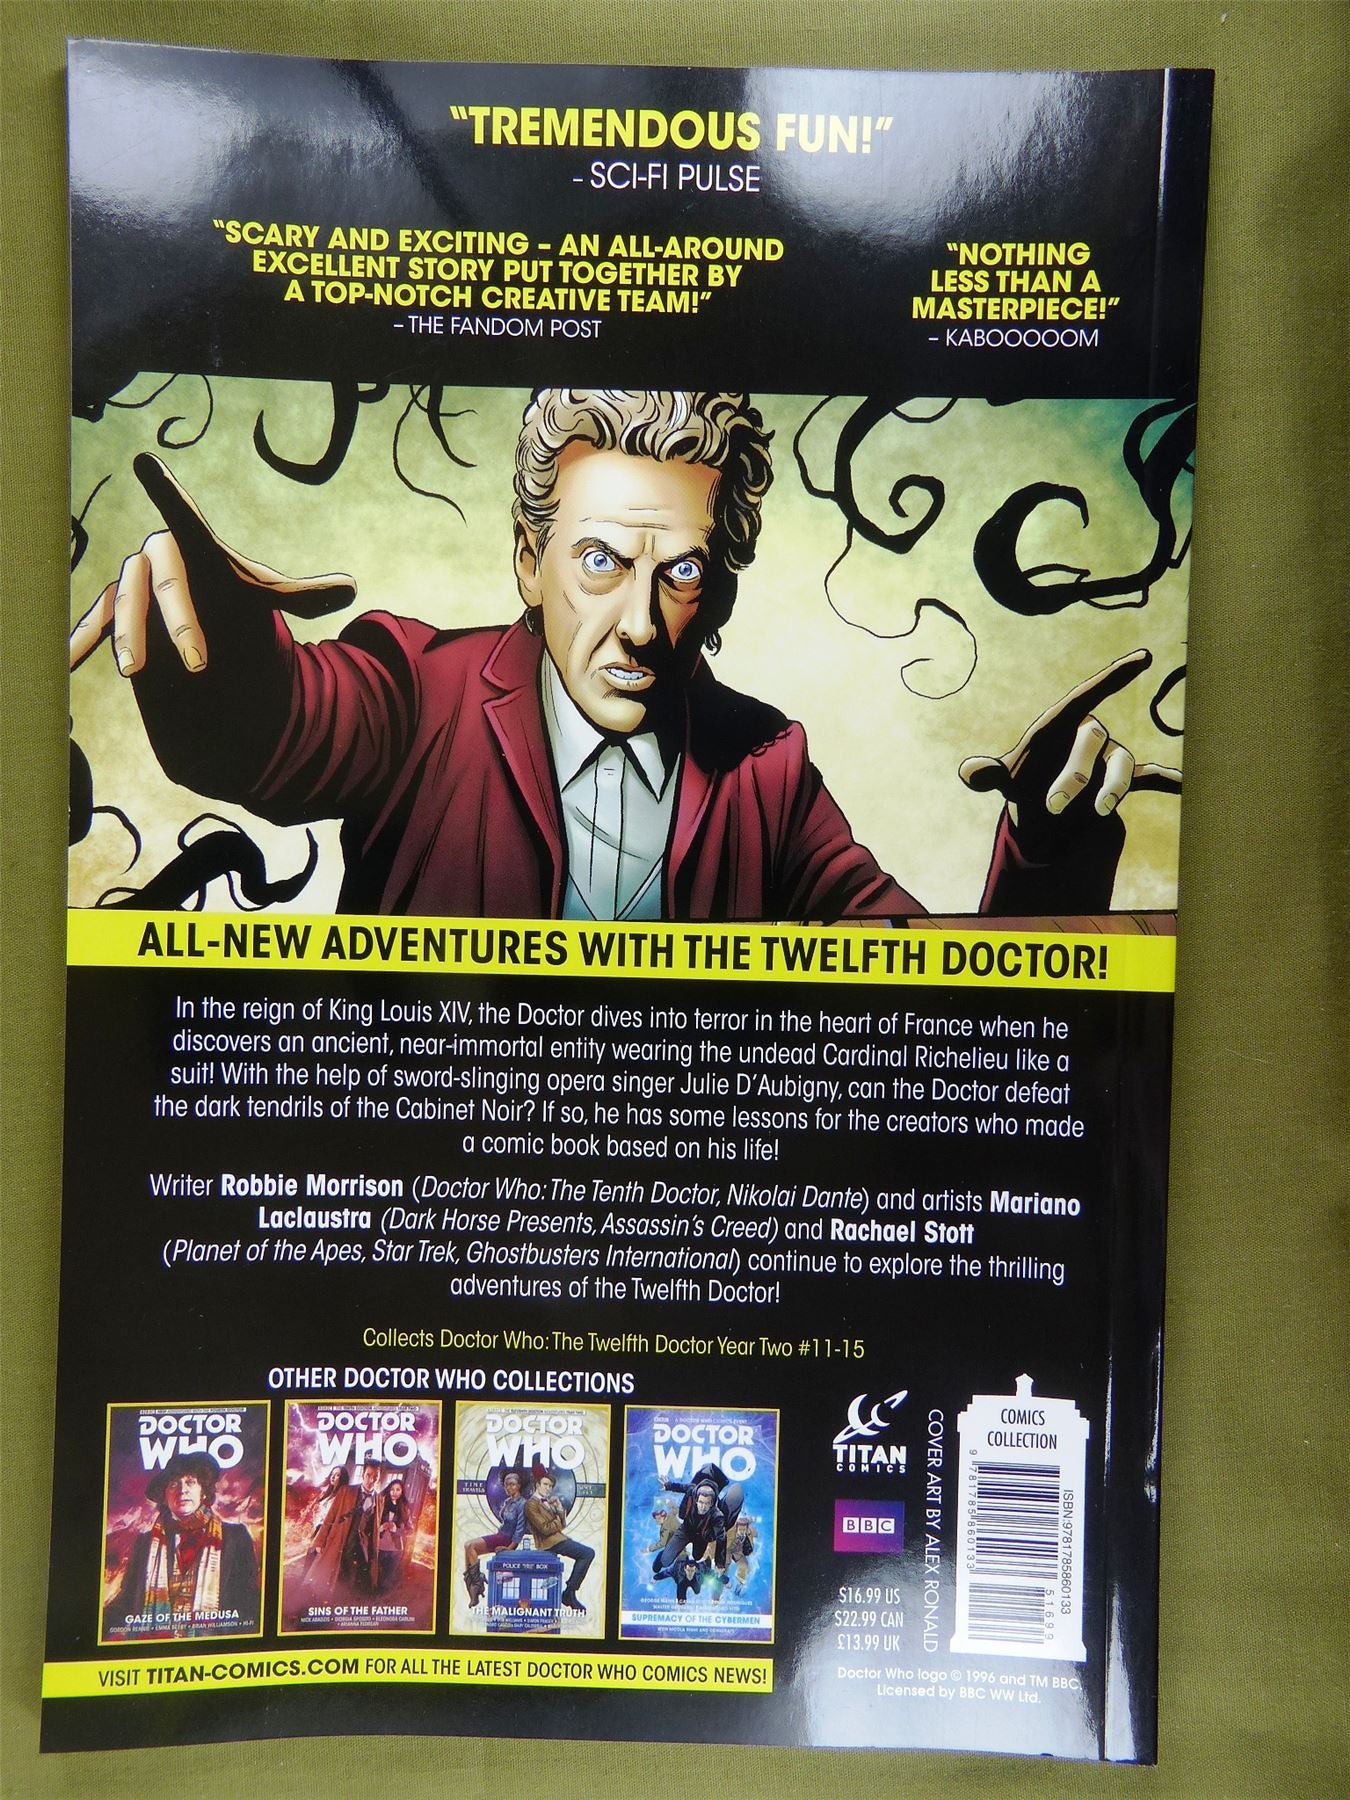 Doctor Who Sonice Boom - Graphic Novel Softback  #H